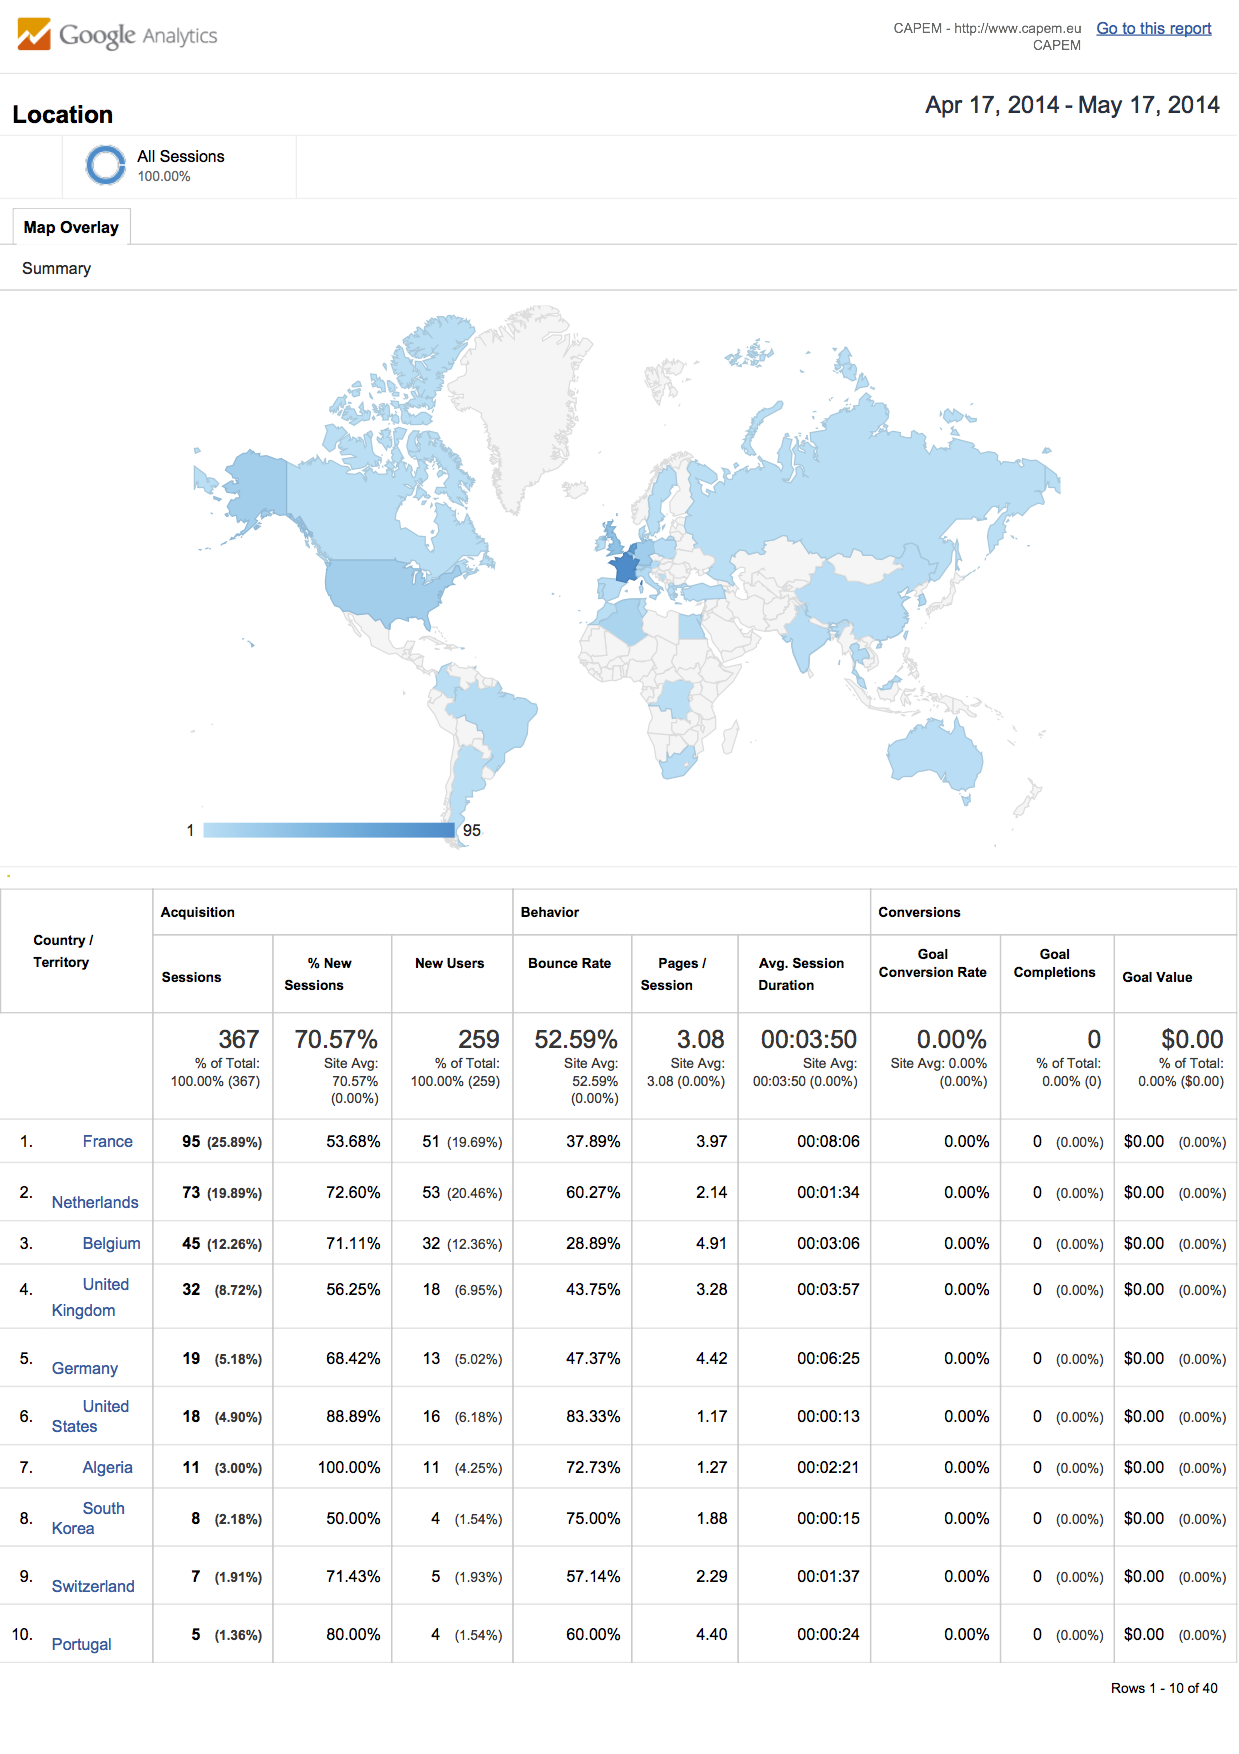 CAPEM Google Analytics Map 20140417 20140517 png